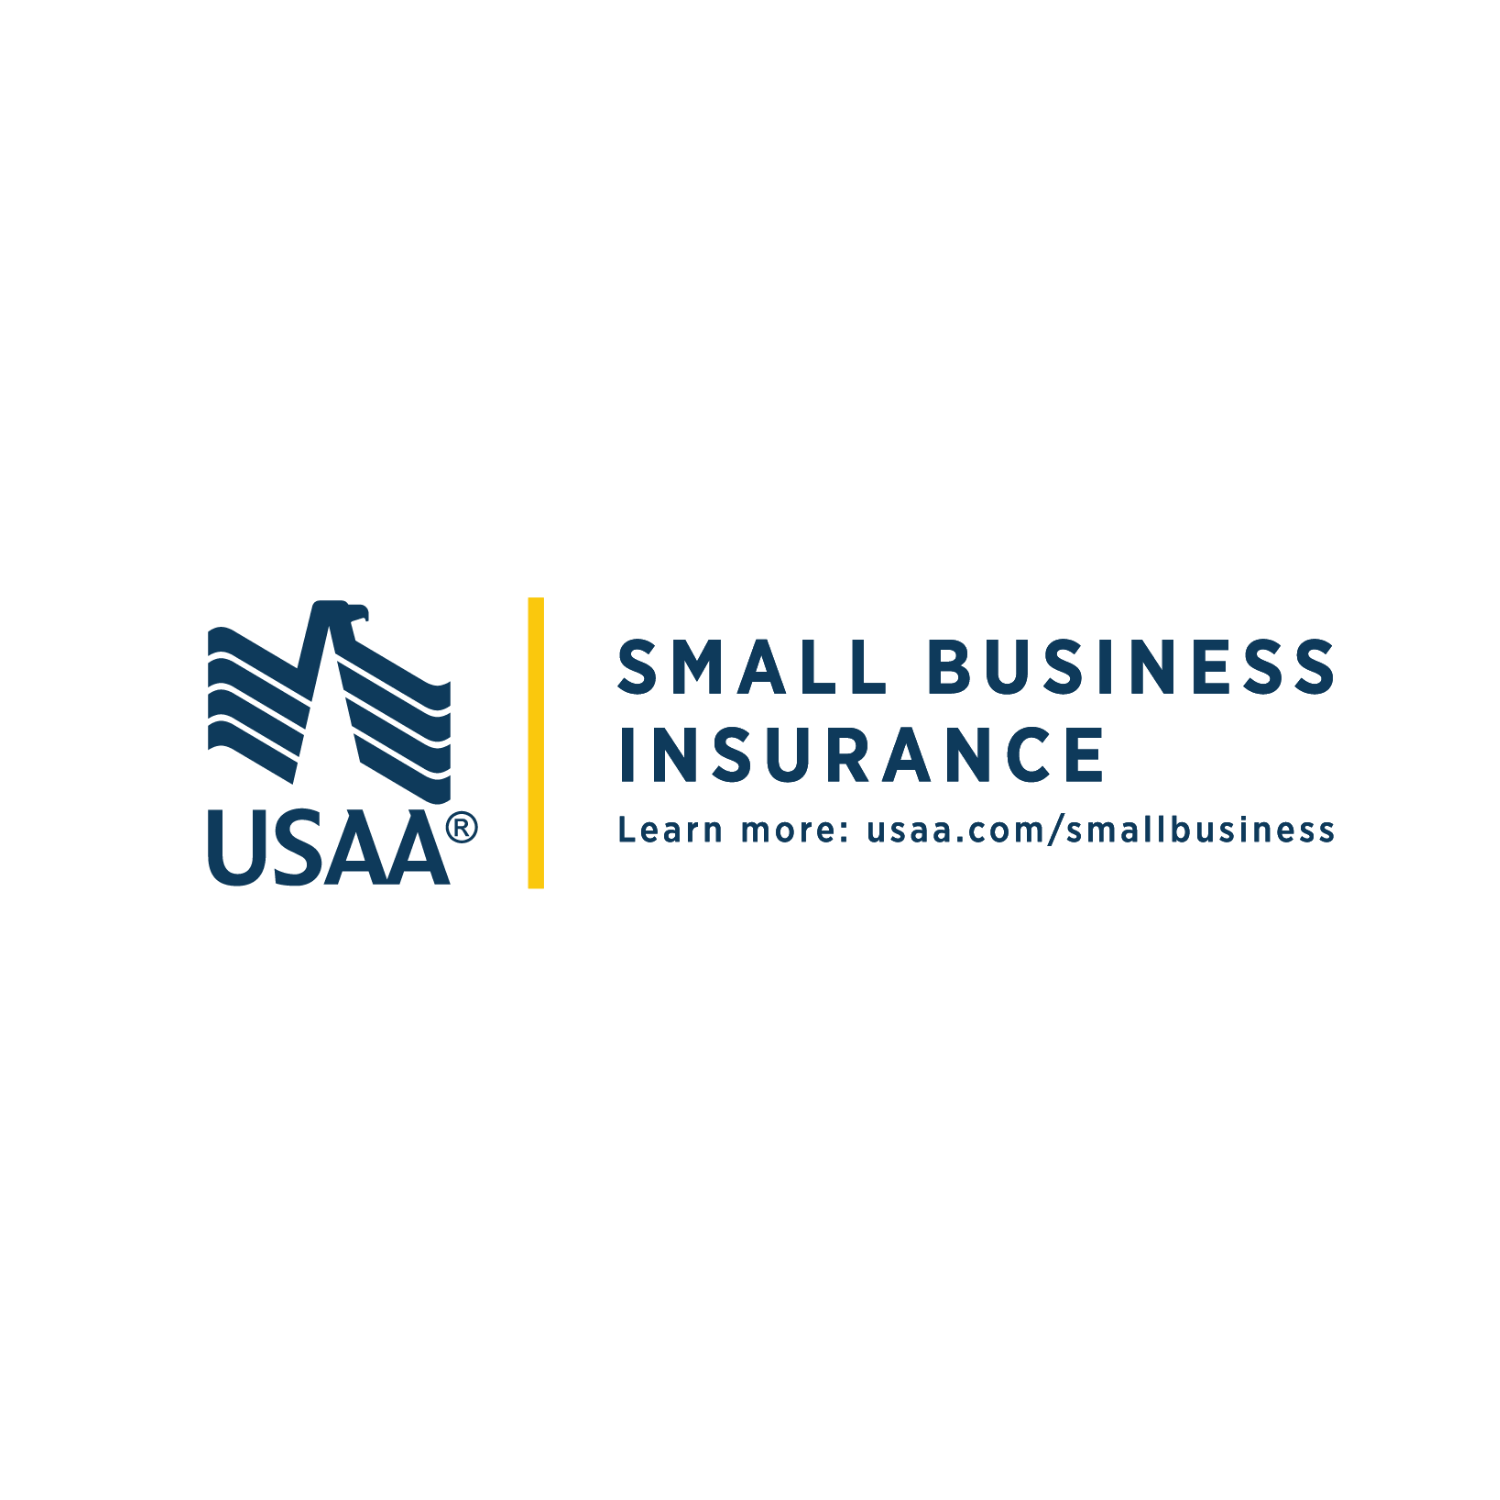 USAA Small Business Insurance Logo